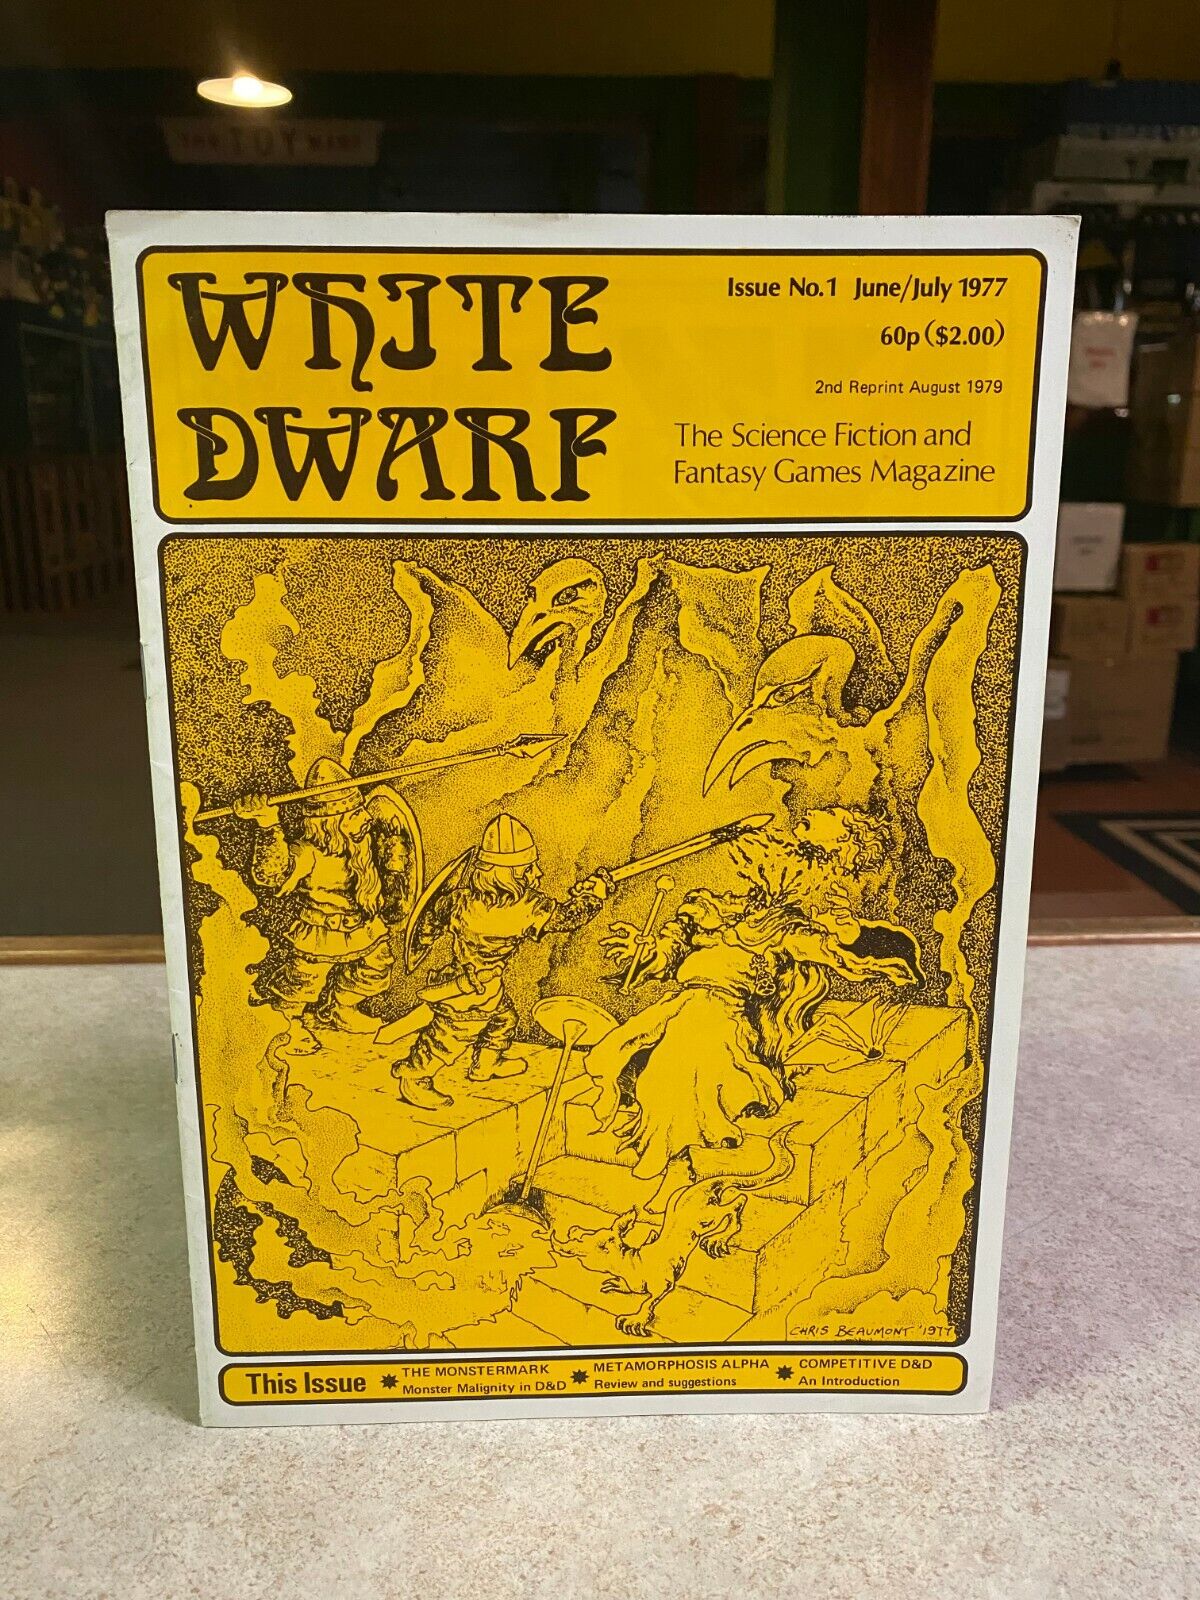 White Dwarf Magazine Premiere Issue #1 Volume 1 Number 1 June/July 1977 TSR D&D